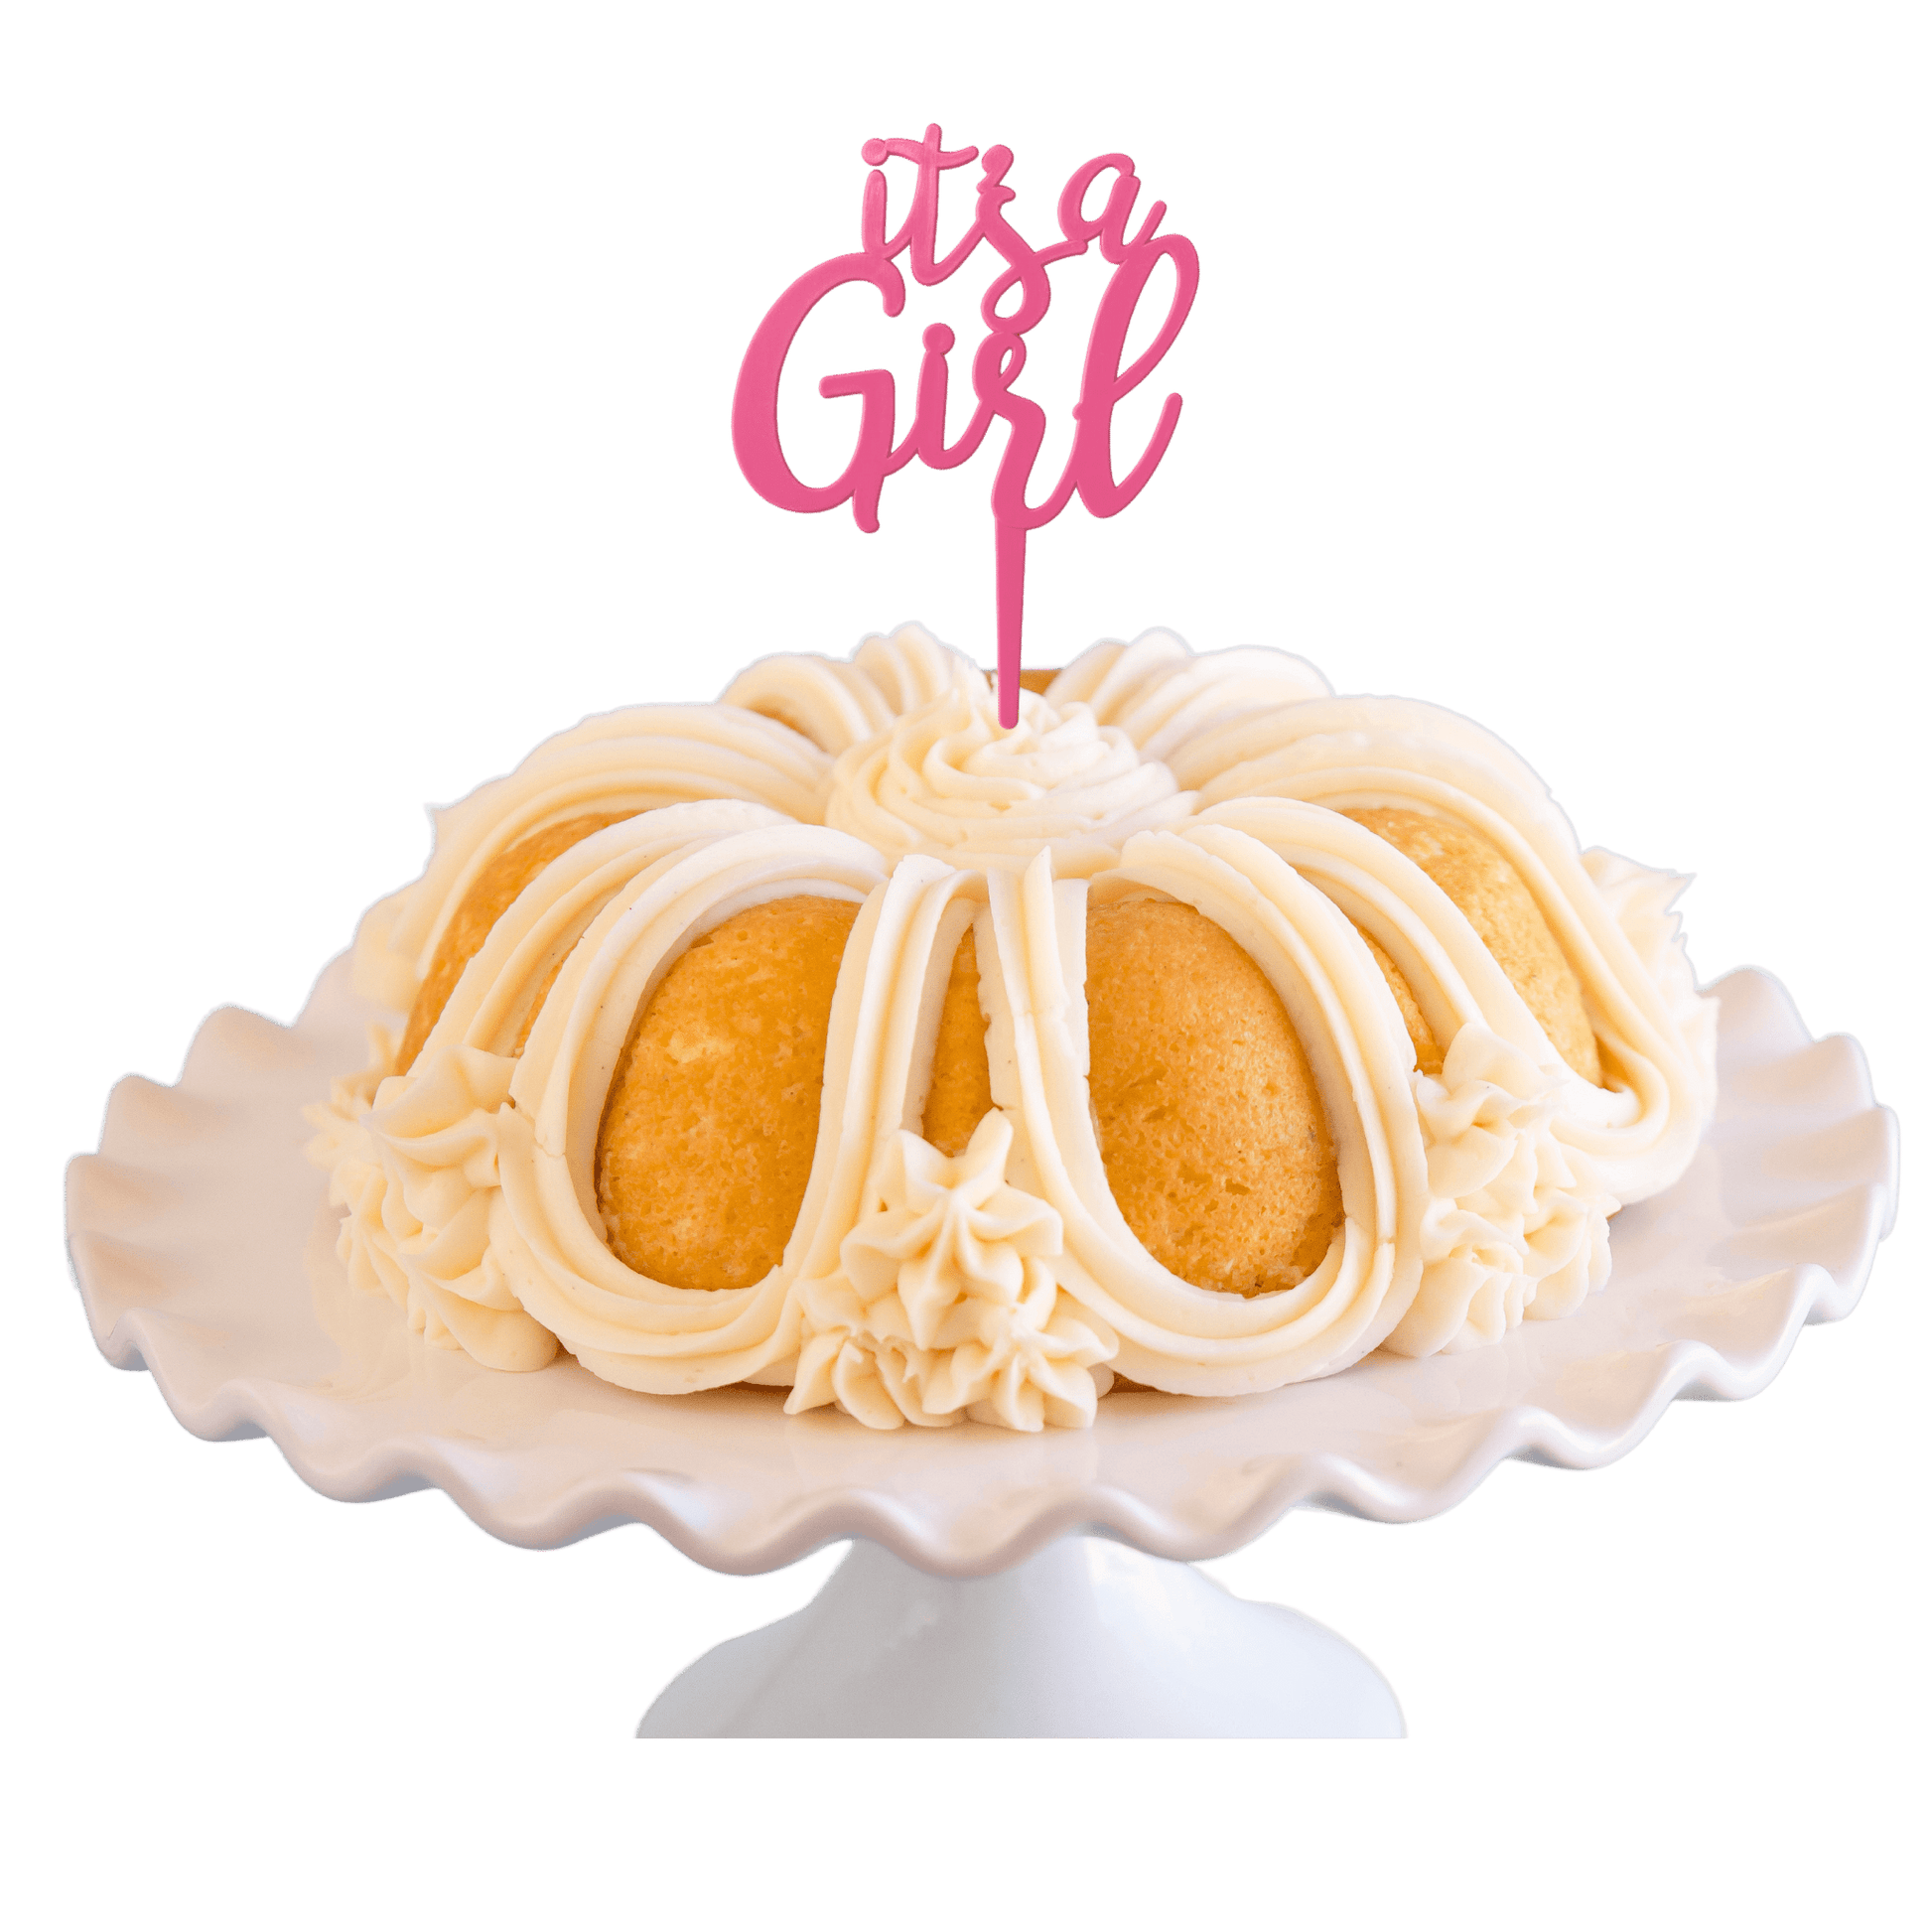 Vanilla Bean "IT'S A GIRL" Bundt Cake - Bundt Cakes